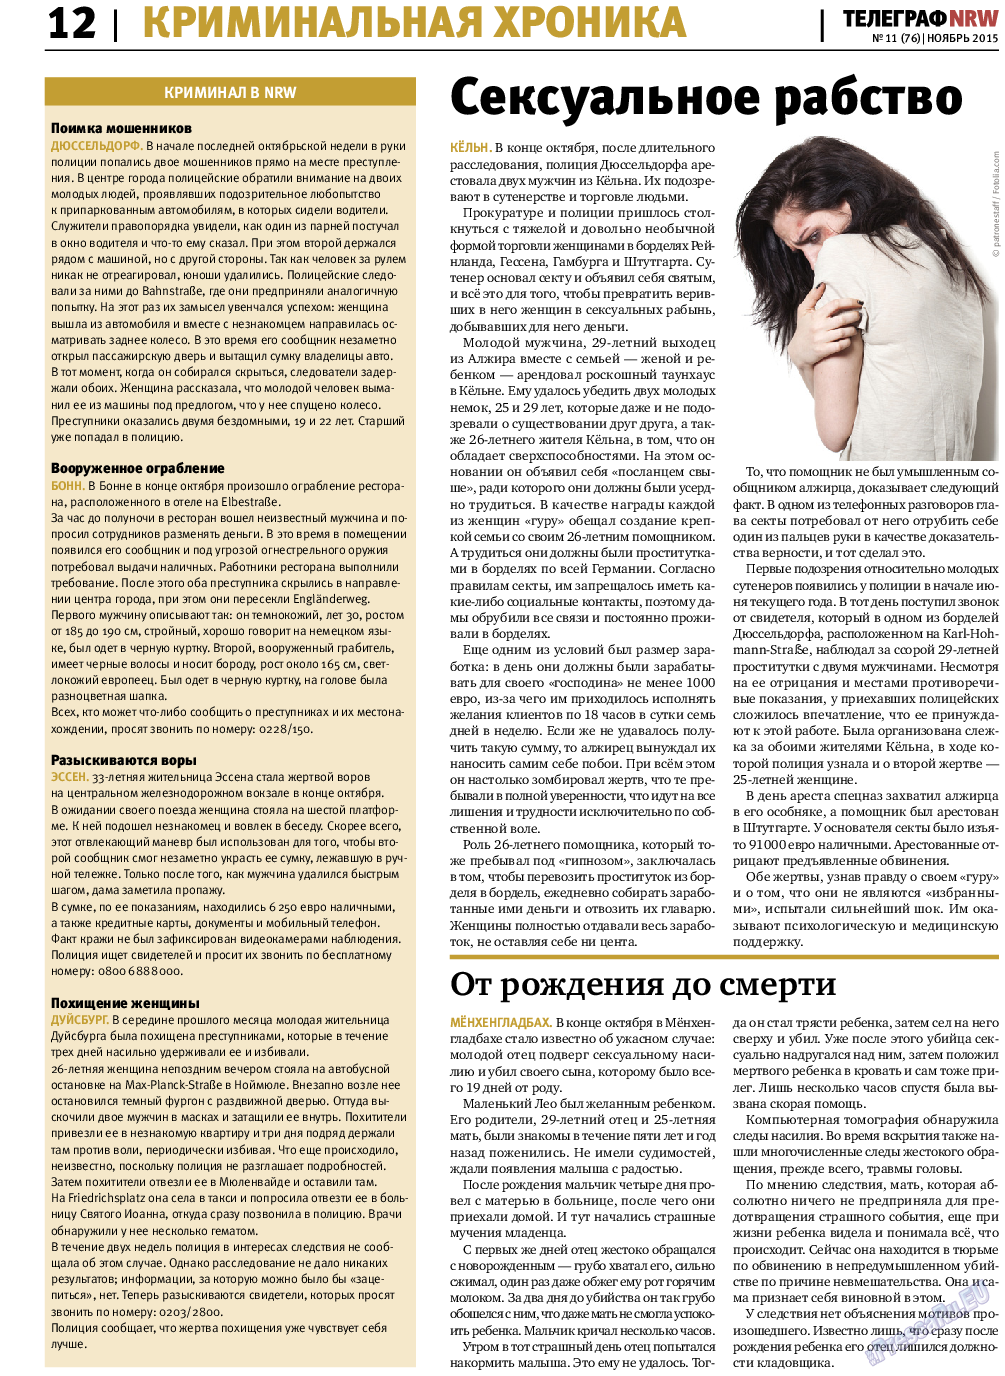 Телеграф NRW, газета. 2015 №11 стр.12